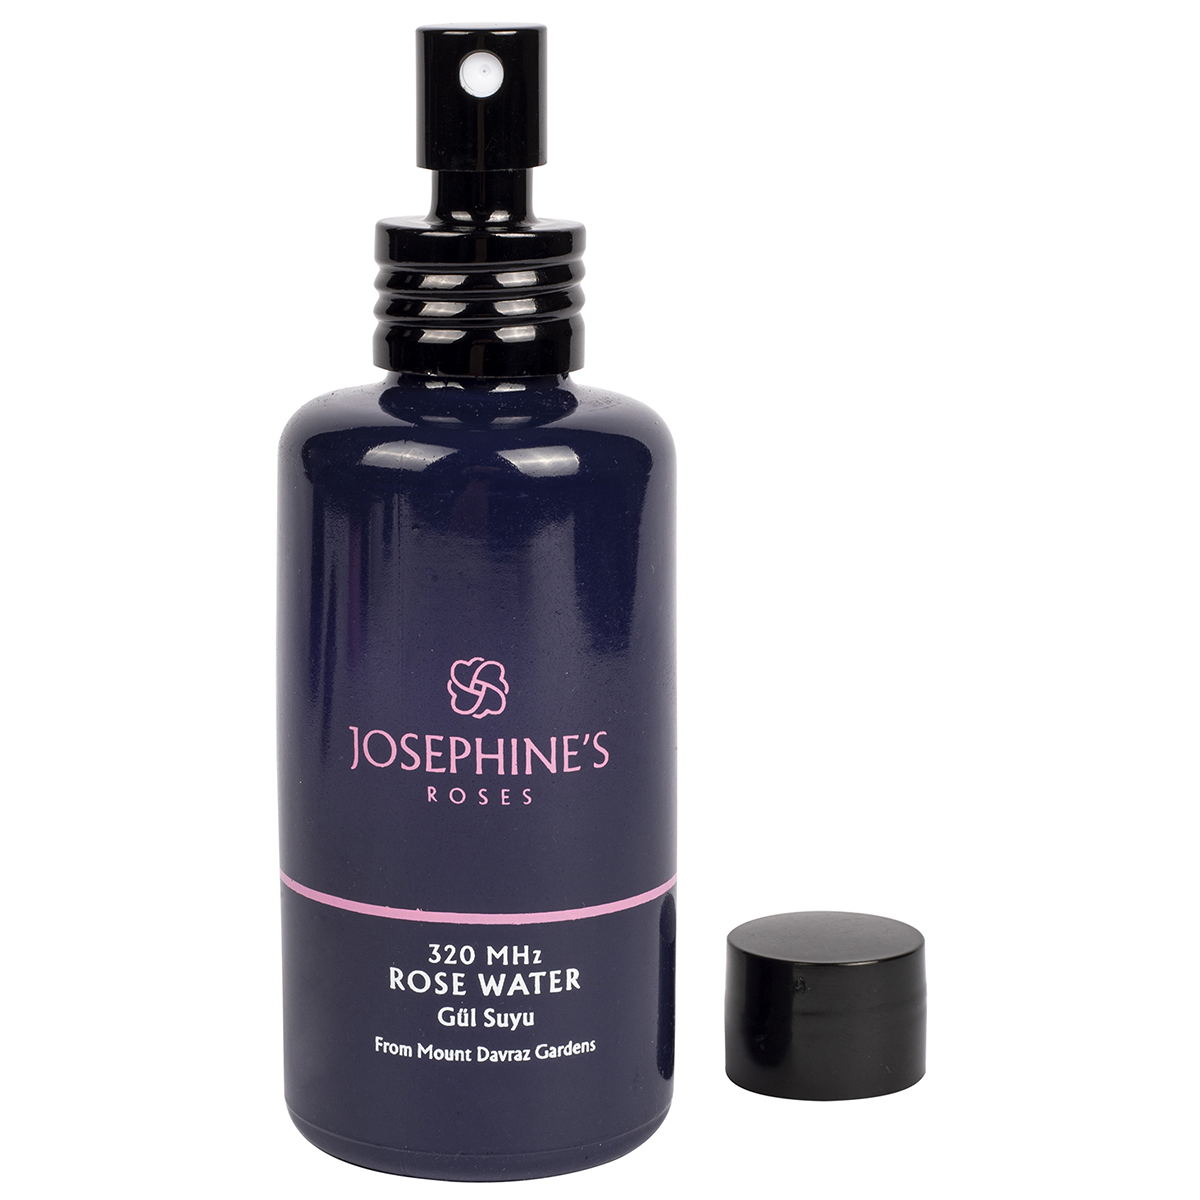 Josephine's roses rose water spray, 100 ml